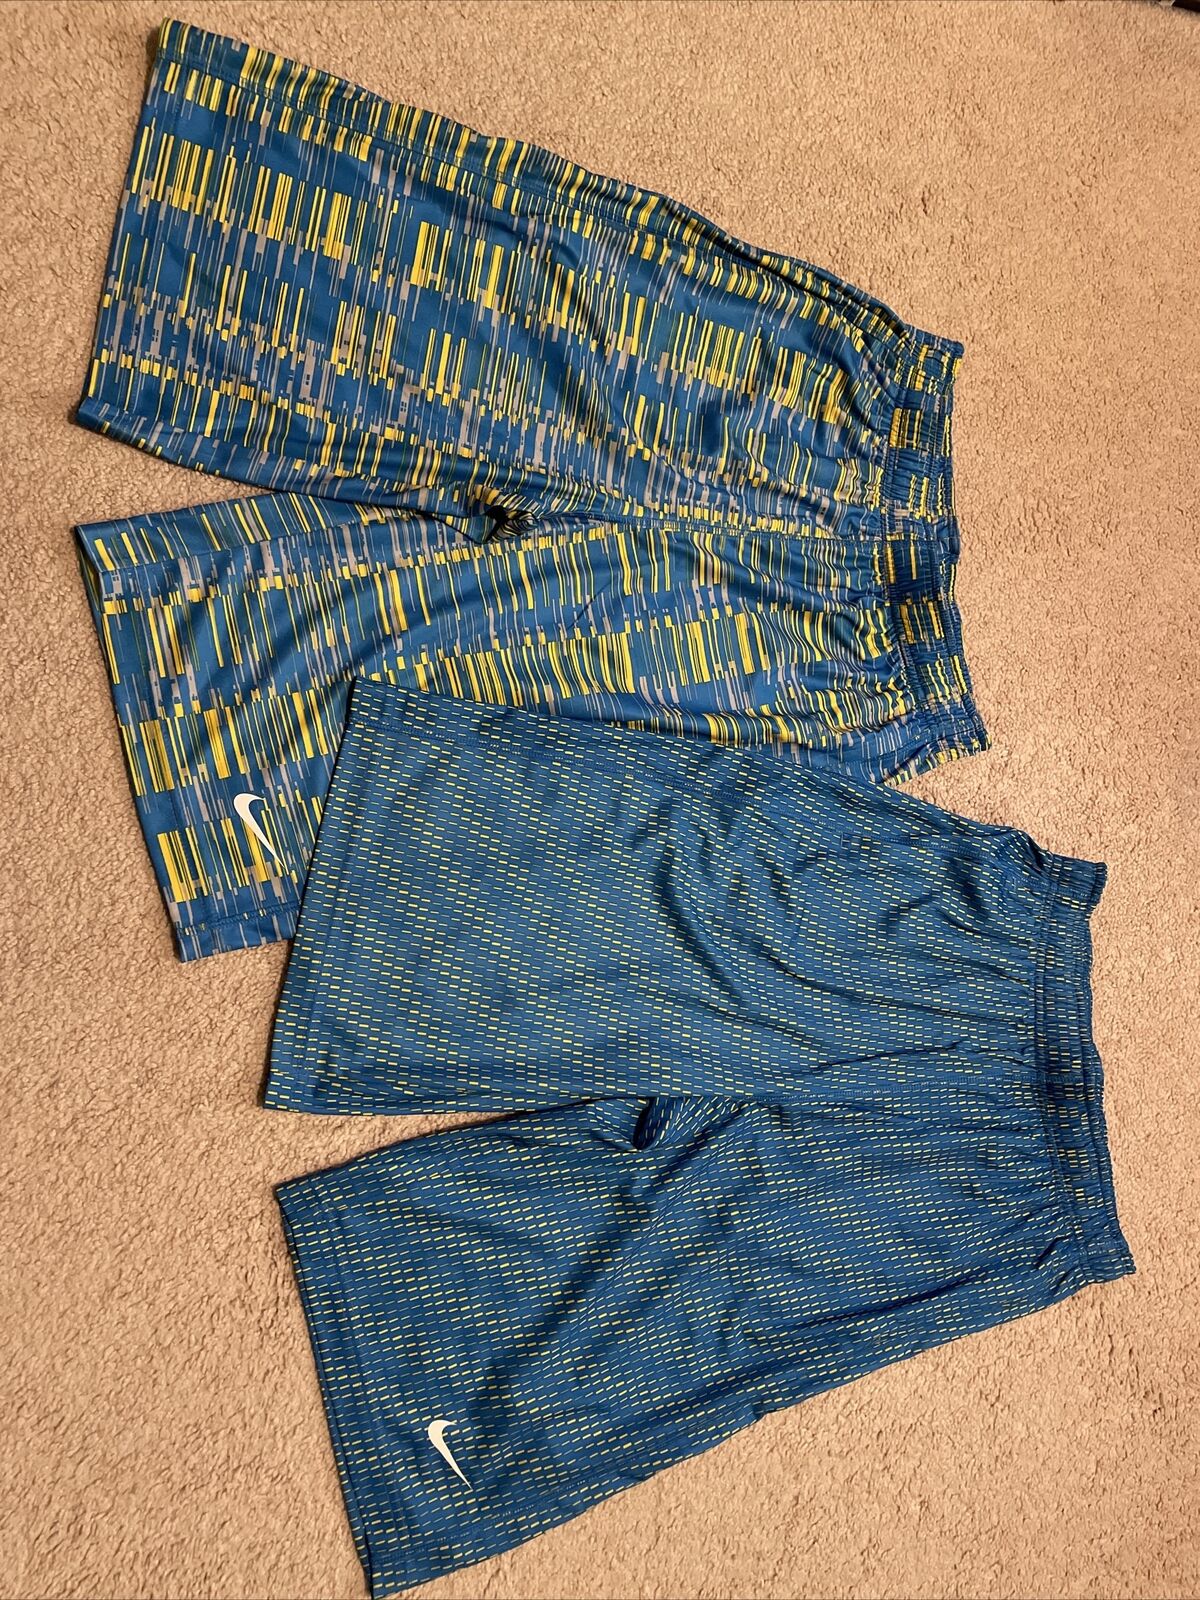 Nike Boys Dri-fit Fly Training Drawstring Shorts Blue Yellow Youth X Large Lot 2